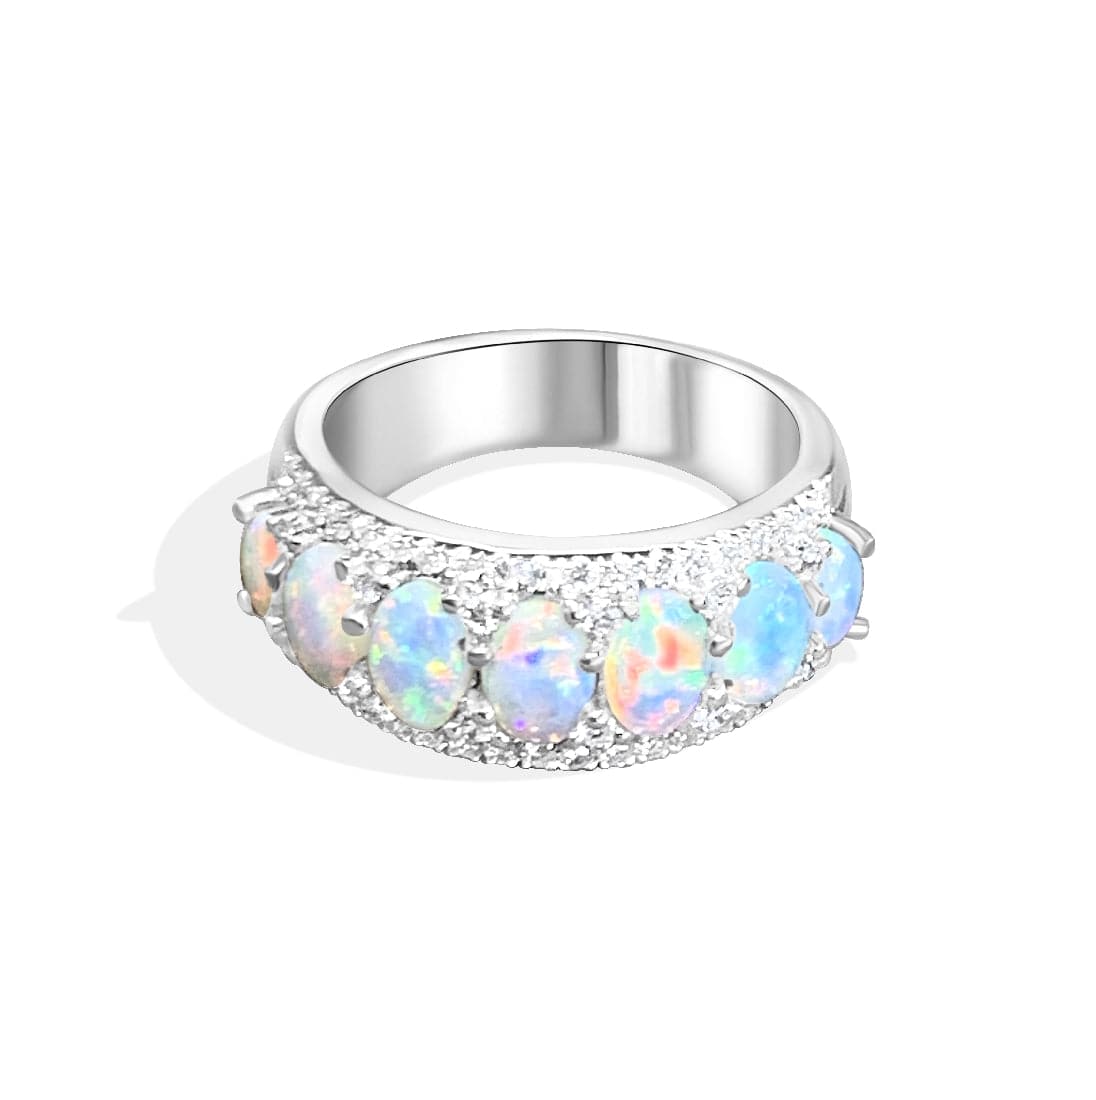 14kt White Gold eternity style Opal and Diamond ring - Masterpiece Jewellery Opal & Gems Sydney Australia | Online Shop